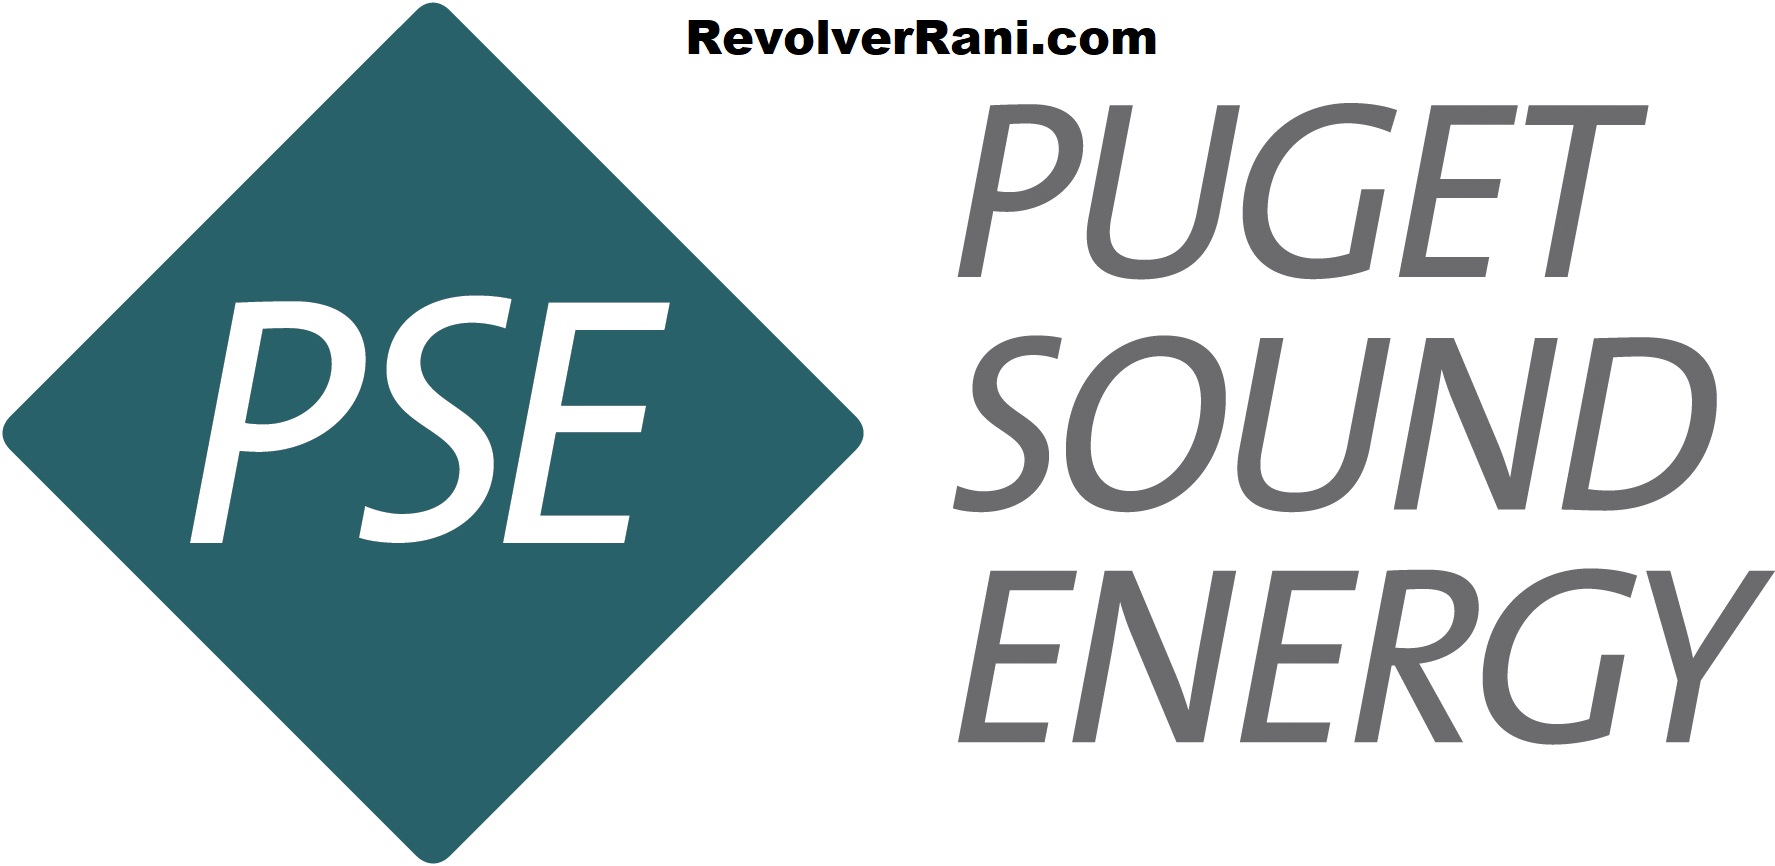 Puget Sound Energy Peak Hours